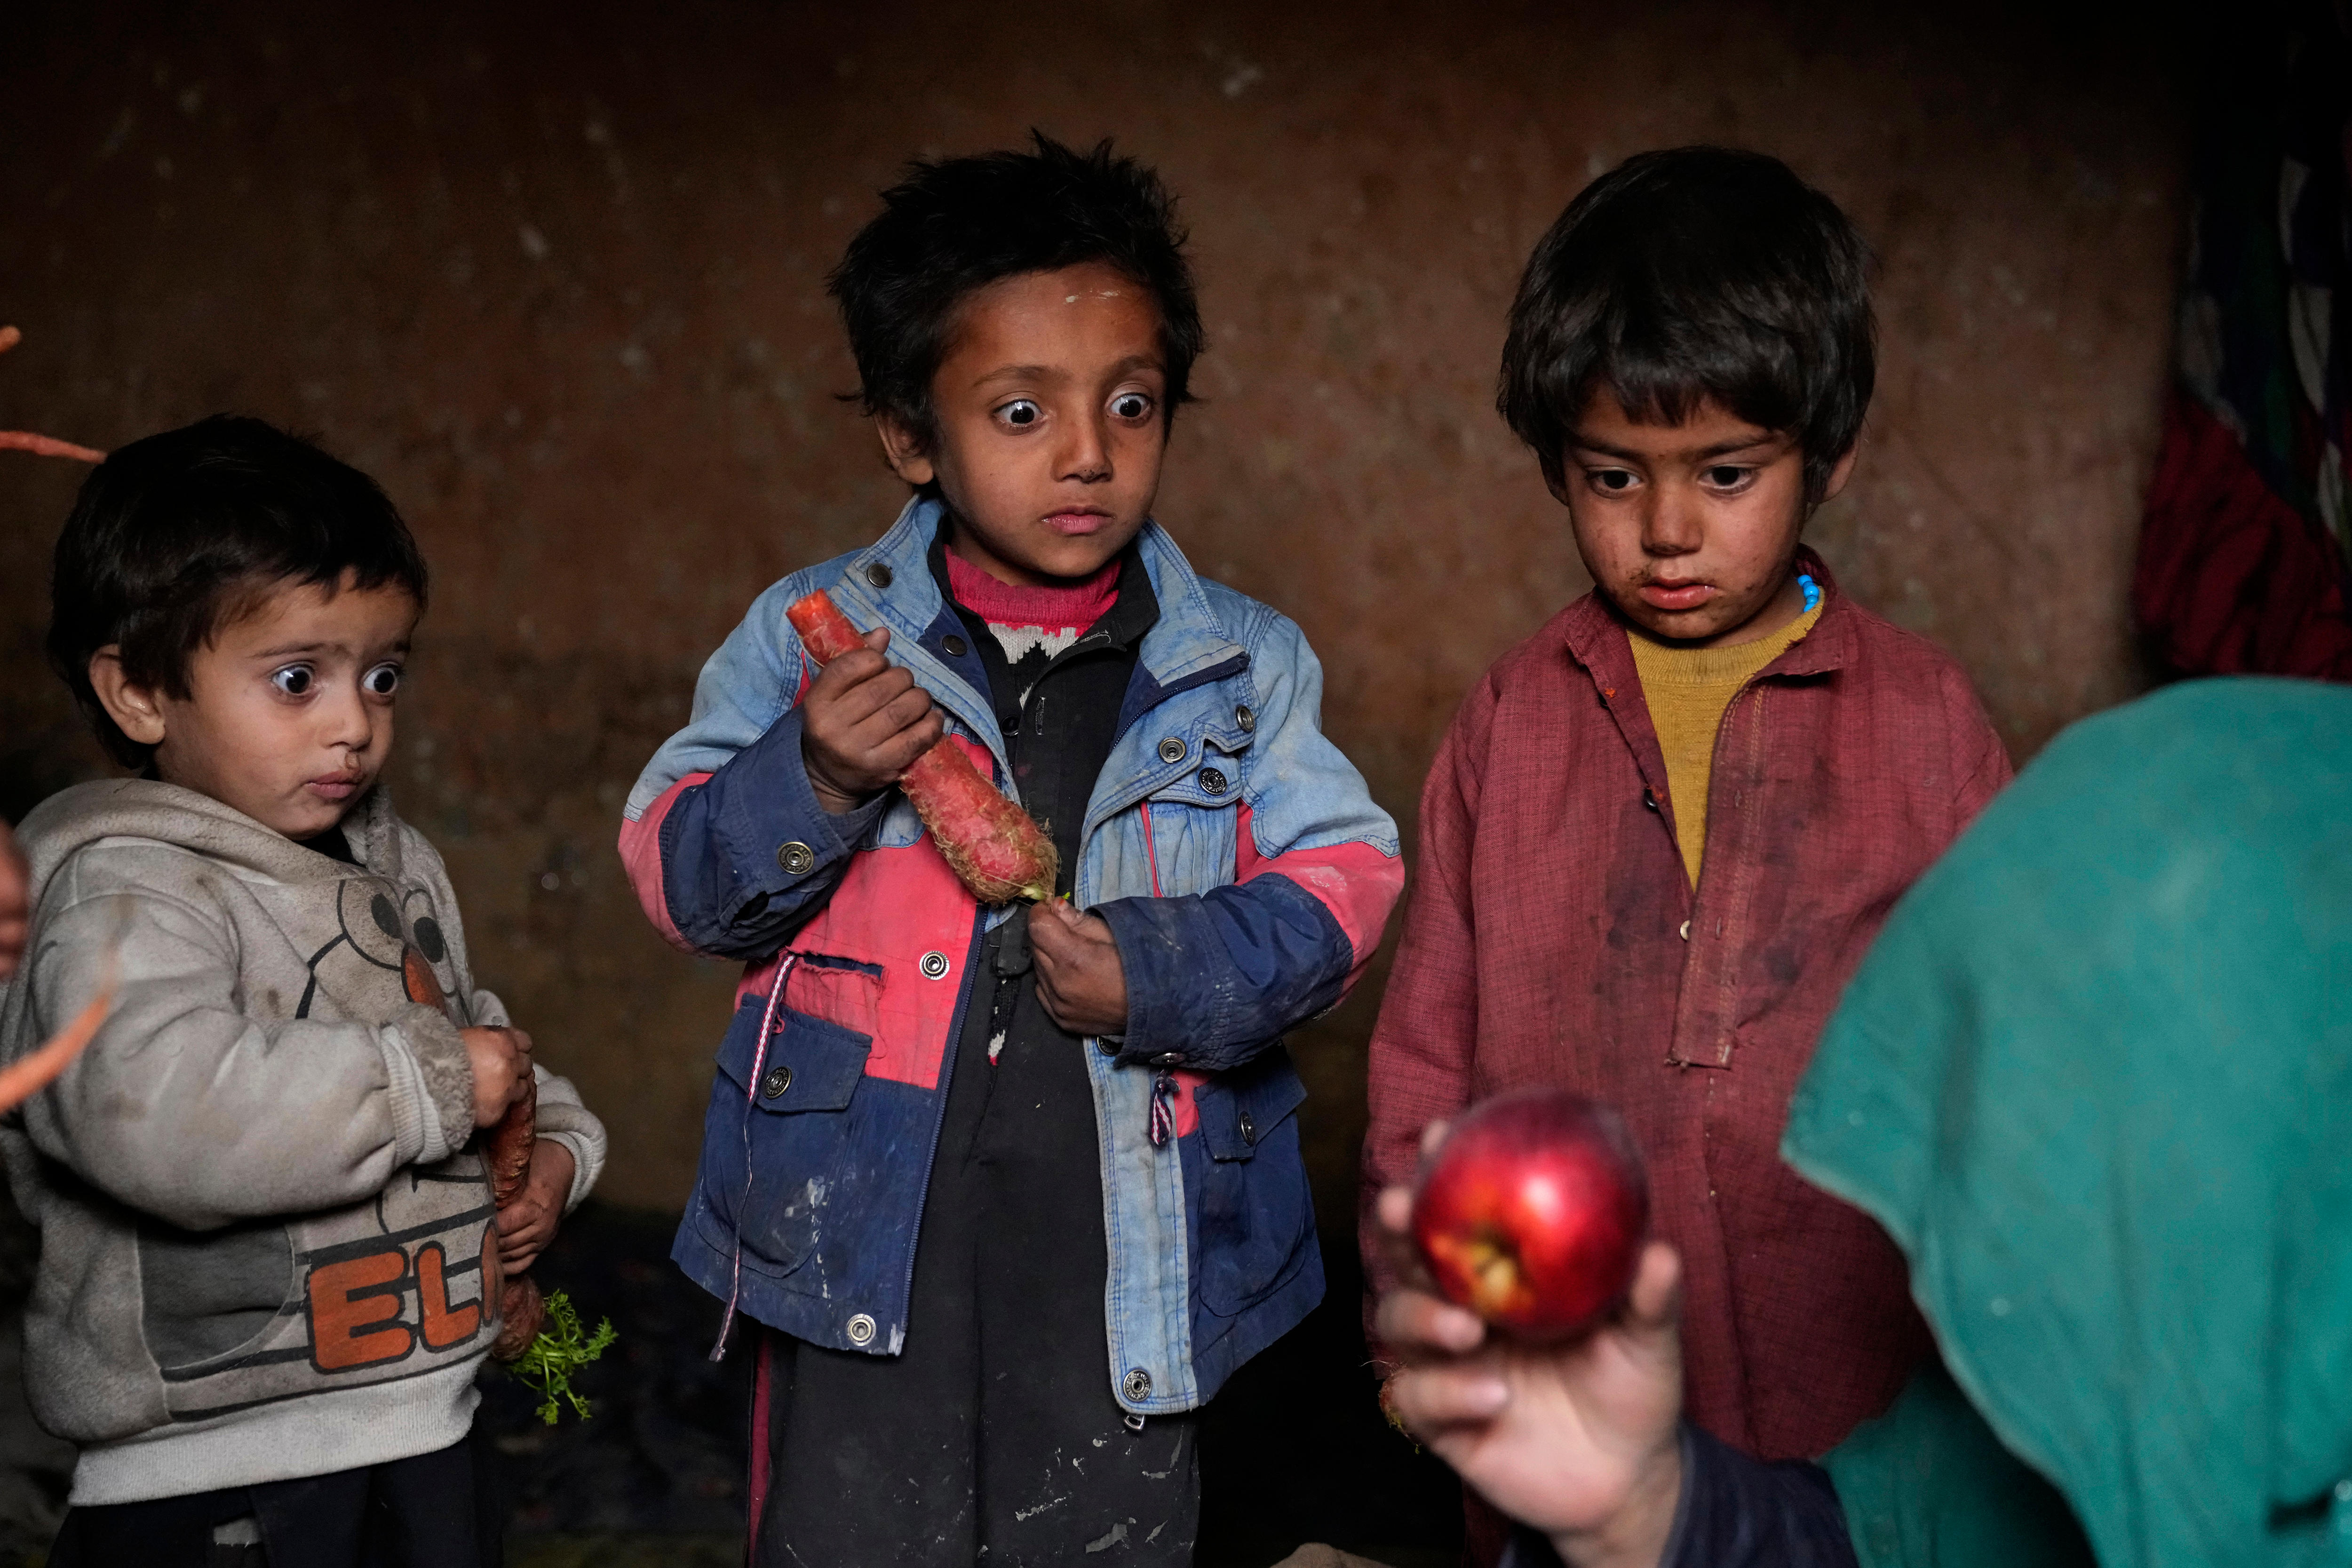 Three small children stare almost transfixed on a red apple